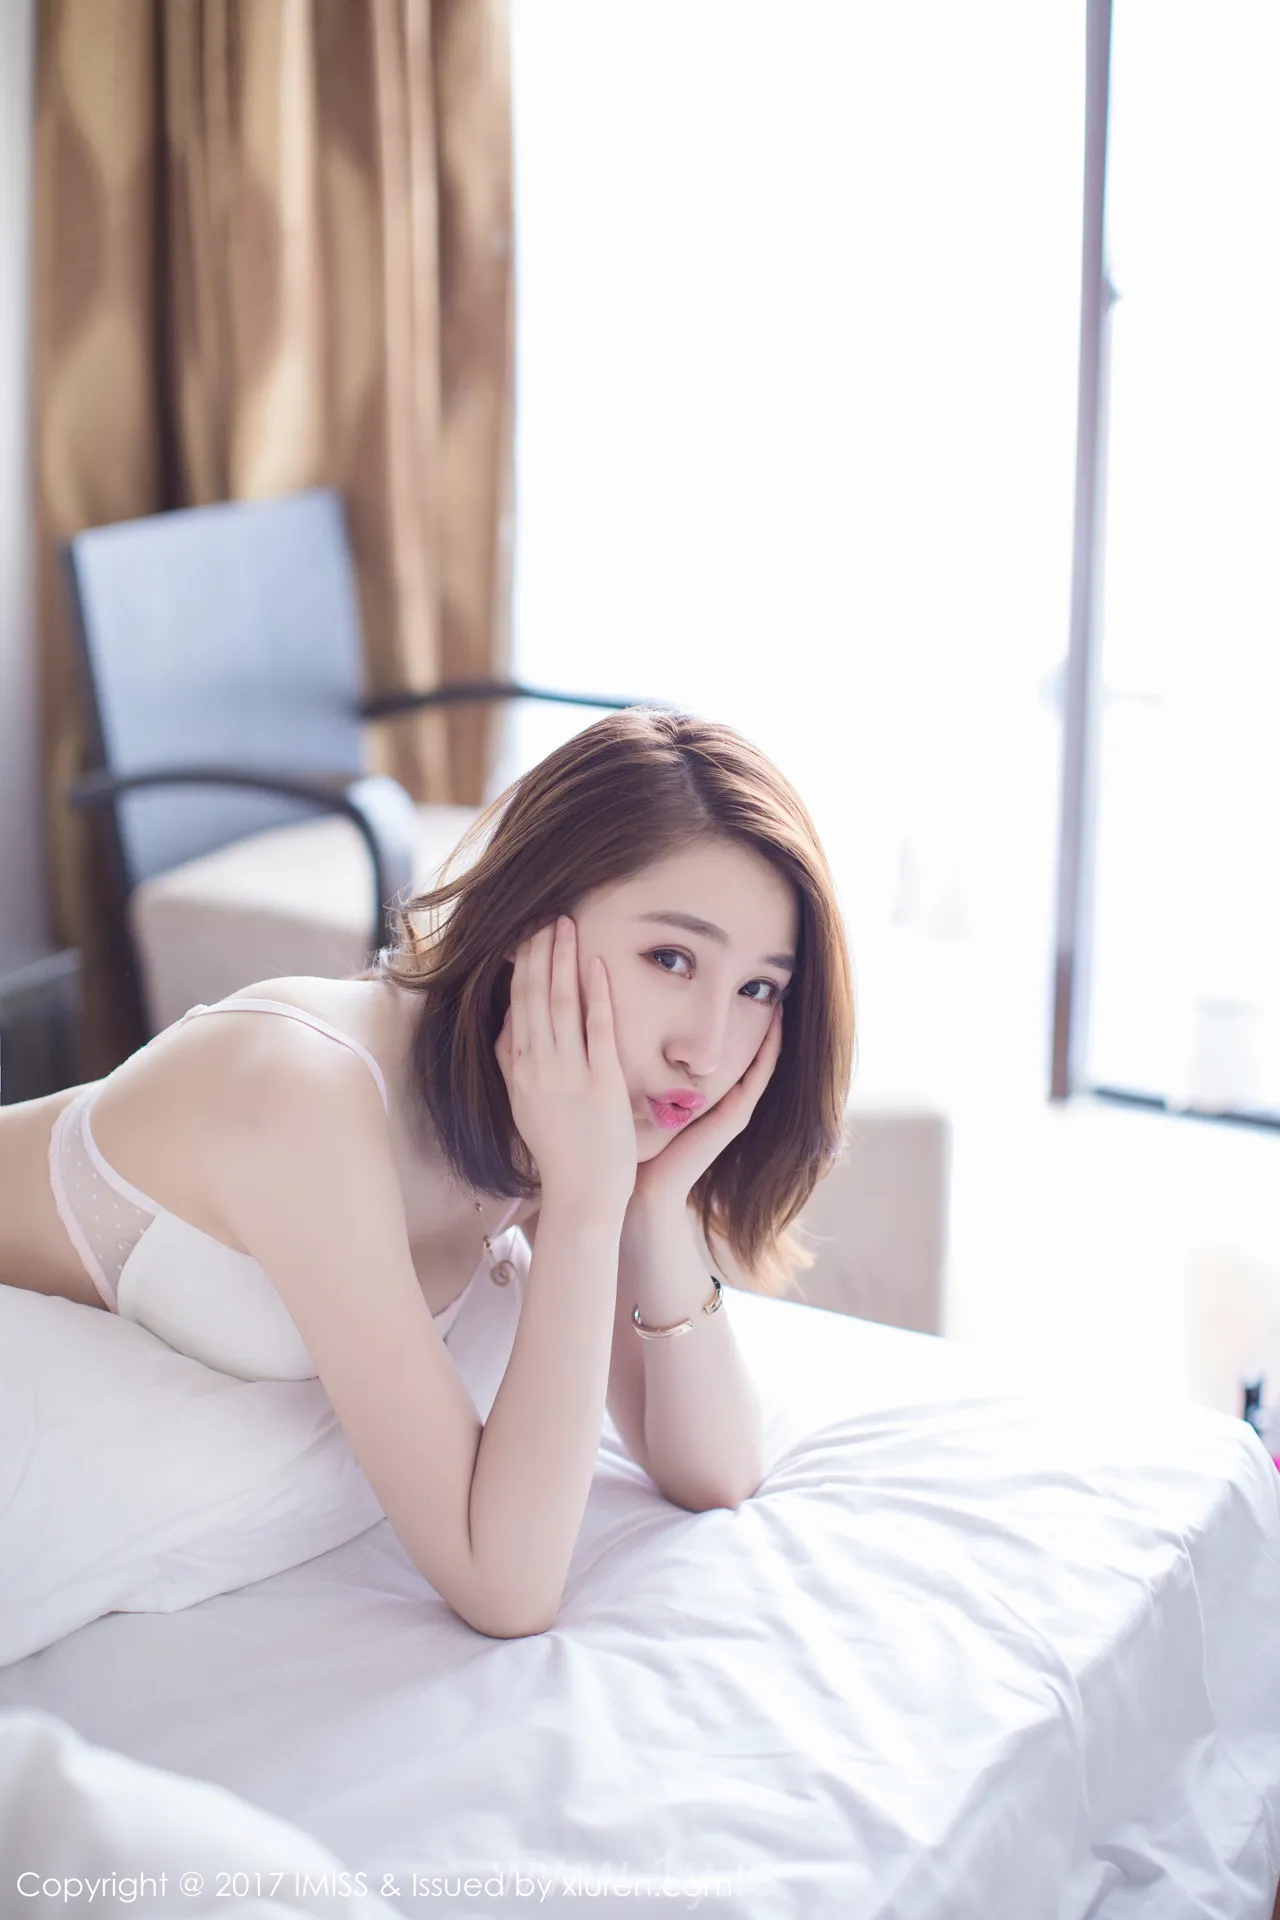 IMISS  NO.160 Lovely Chinese Girl 刘奕宁Lynn